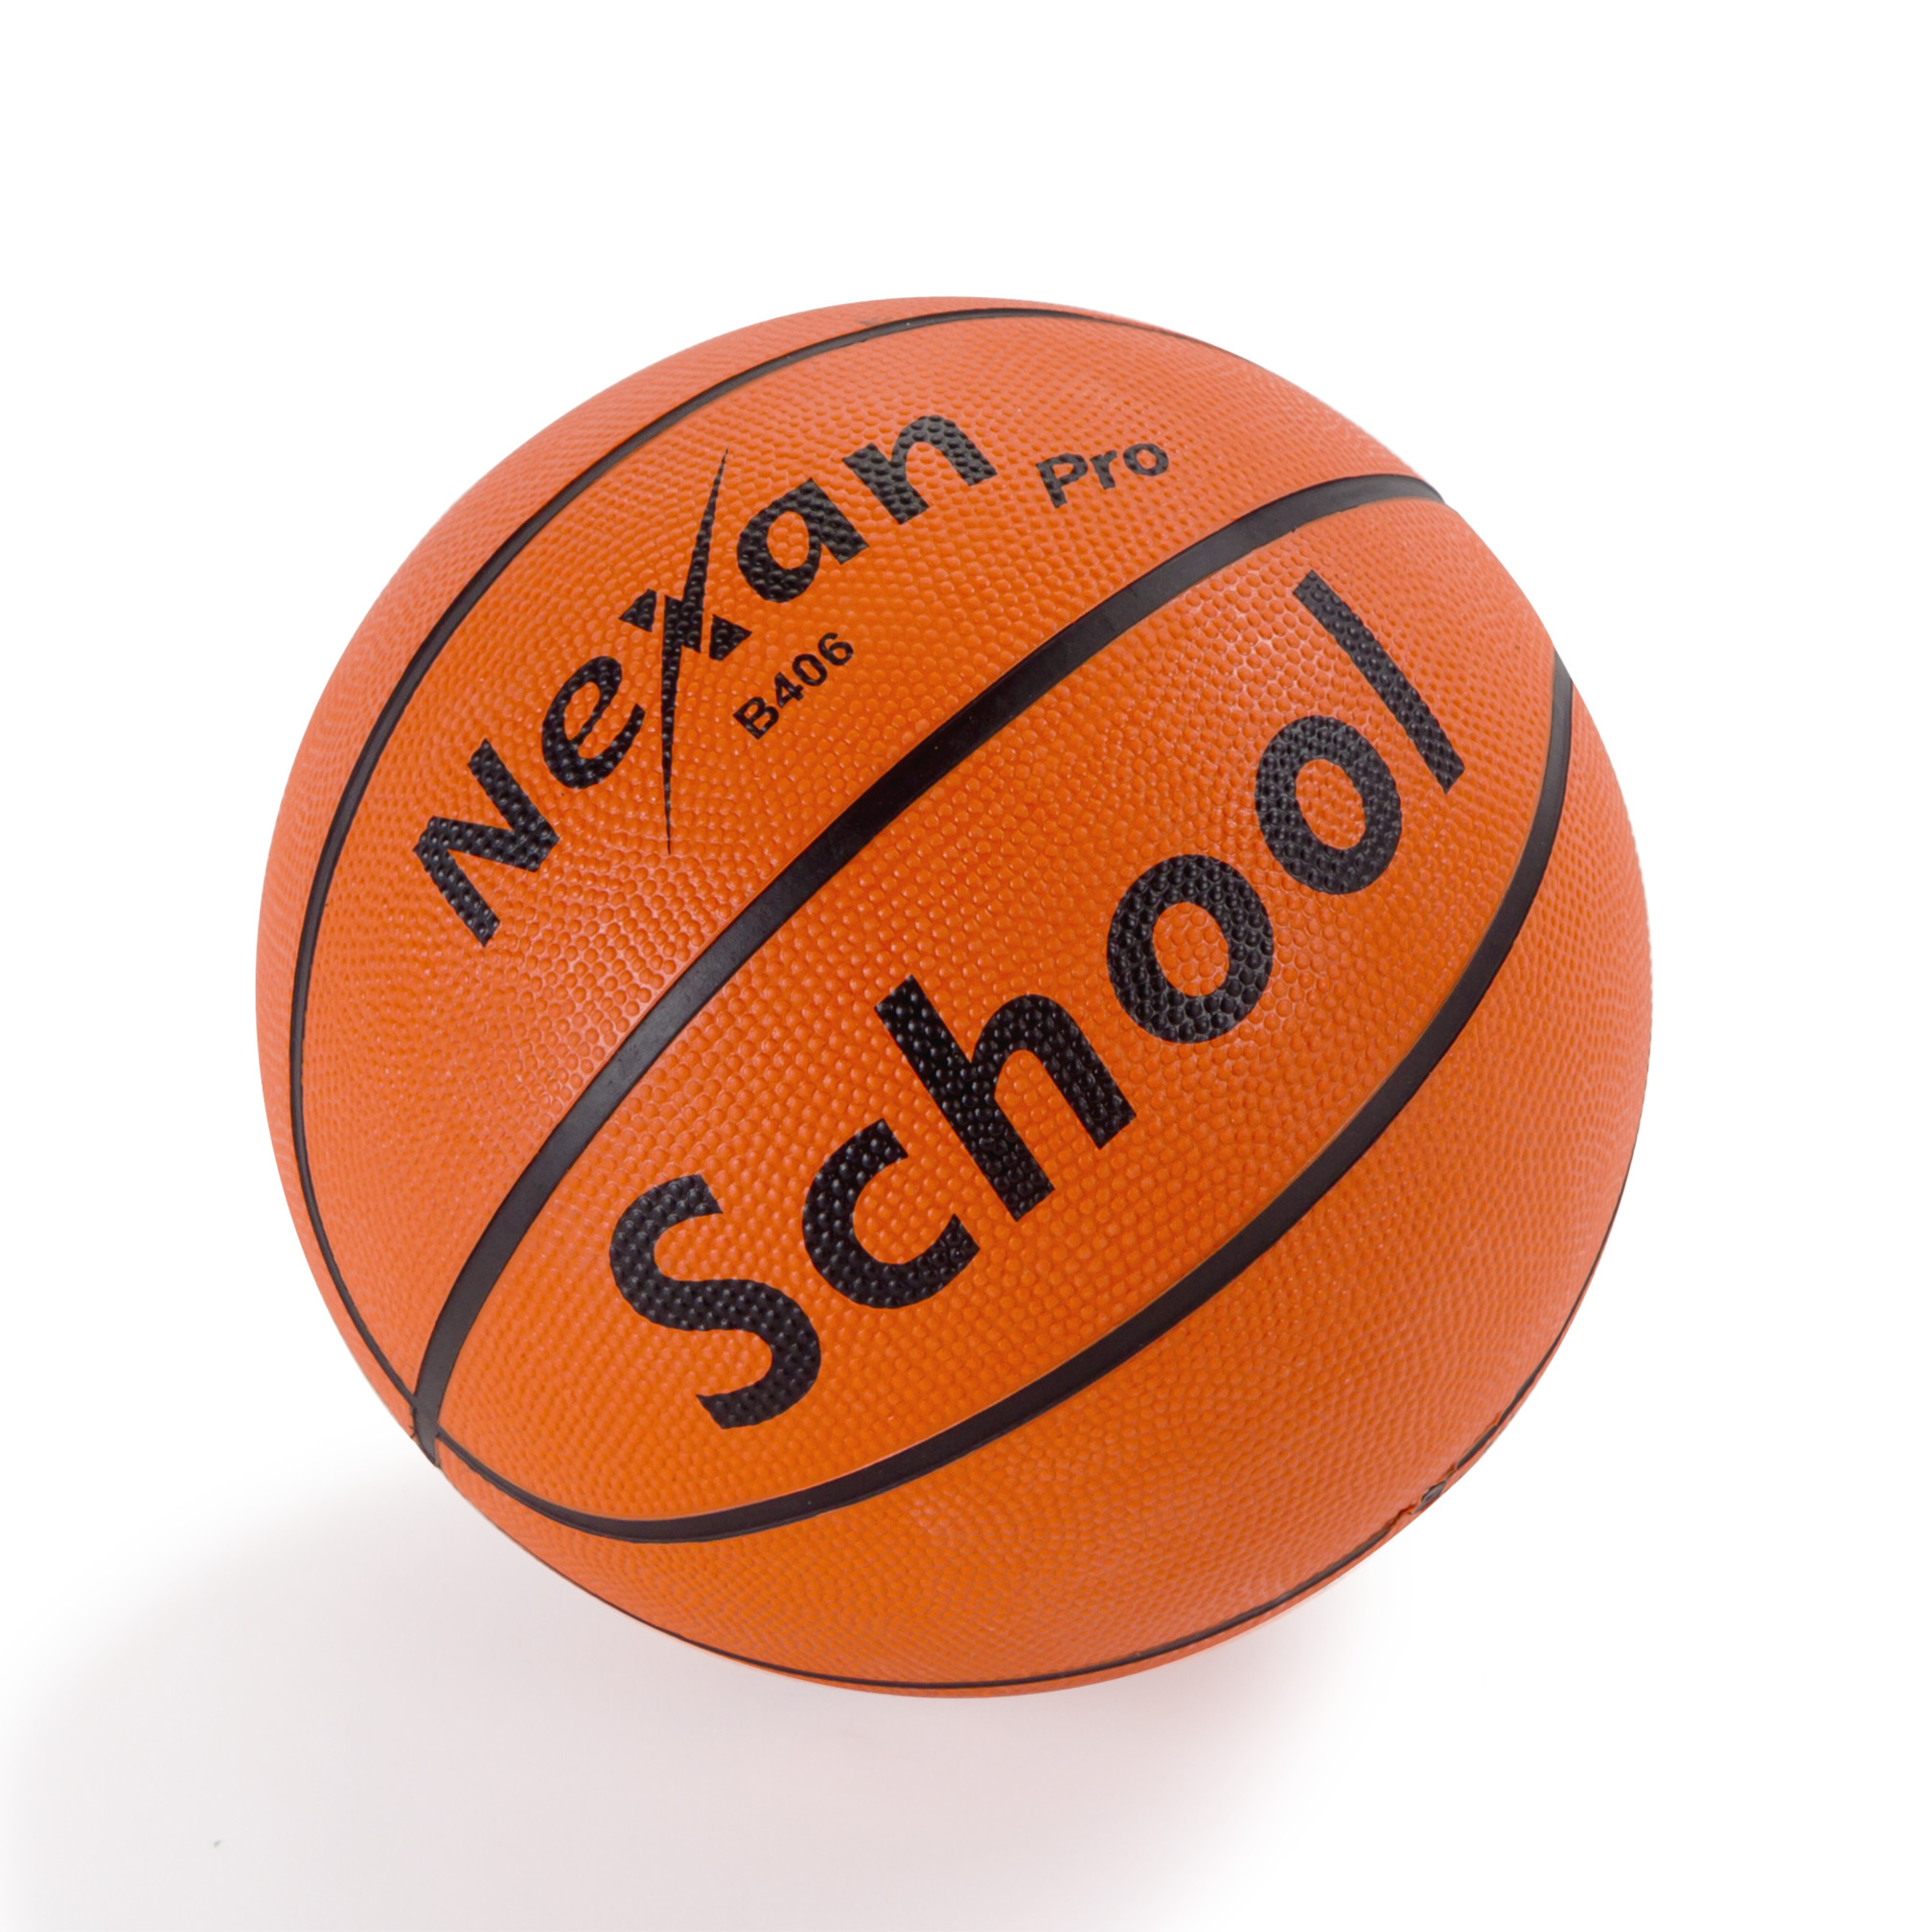 Basketbal Nexan SCHOOL, M6